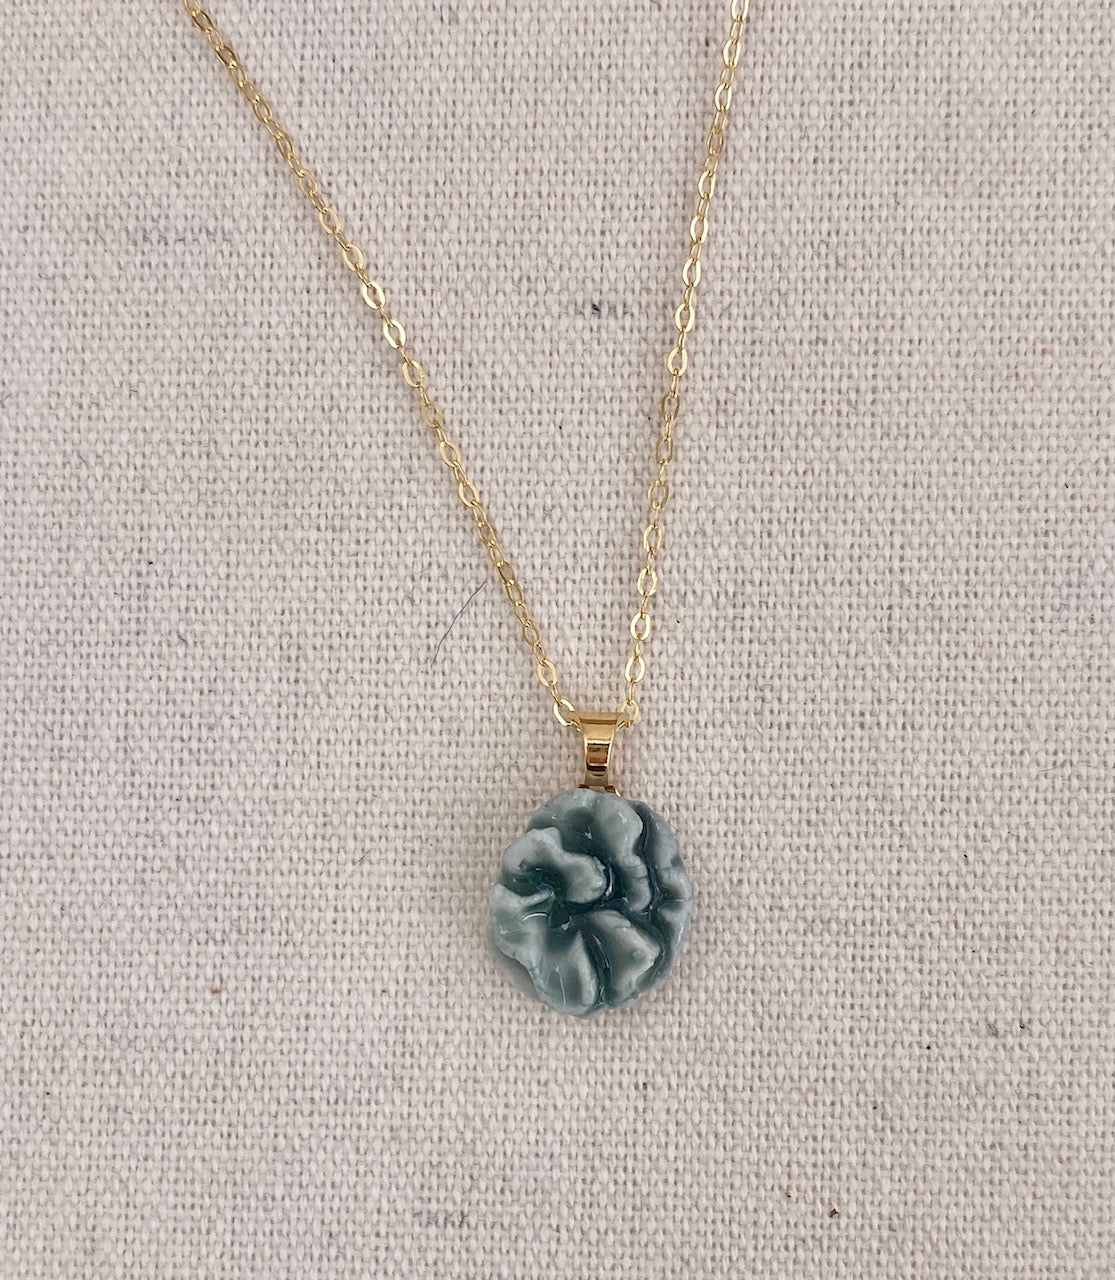 Porcelain "ruffle" flower necklace.